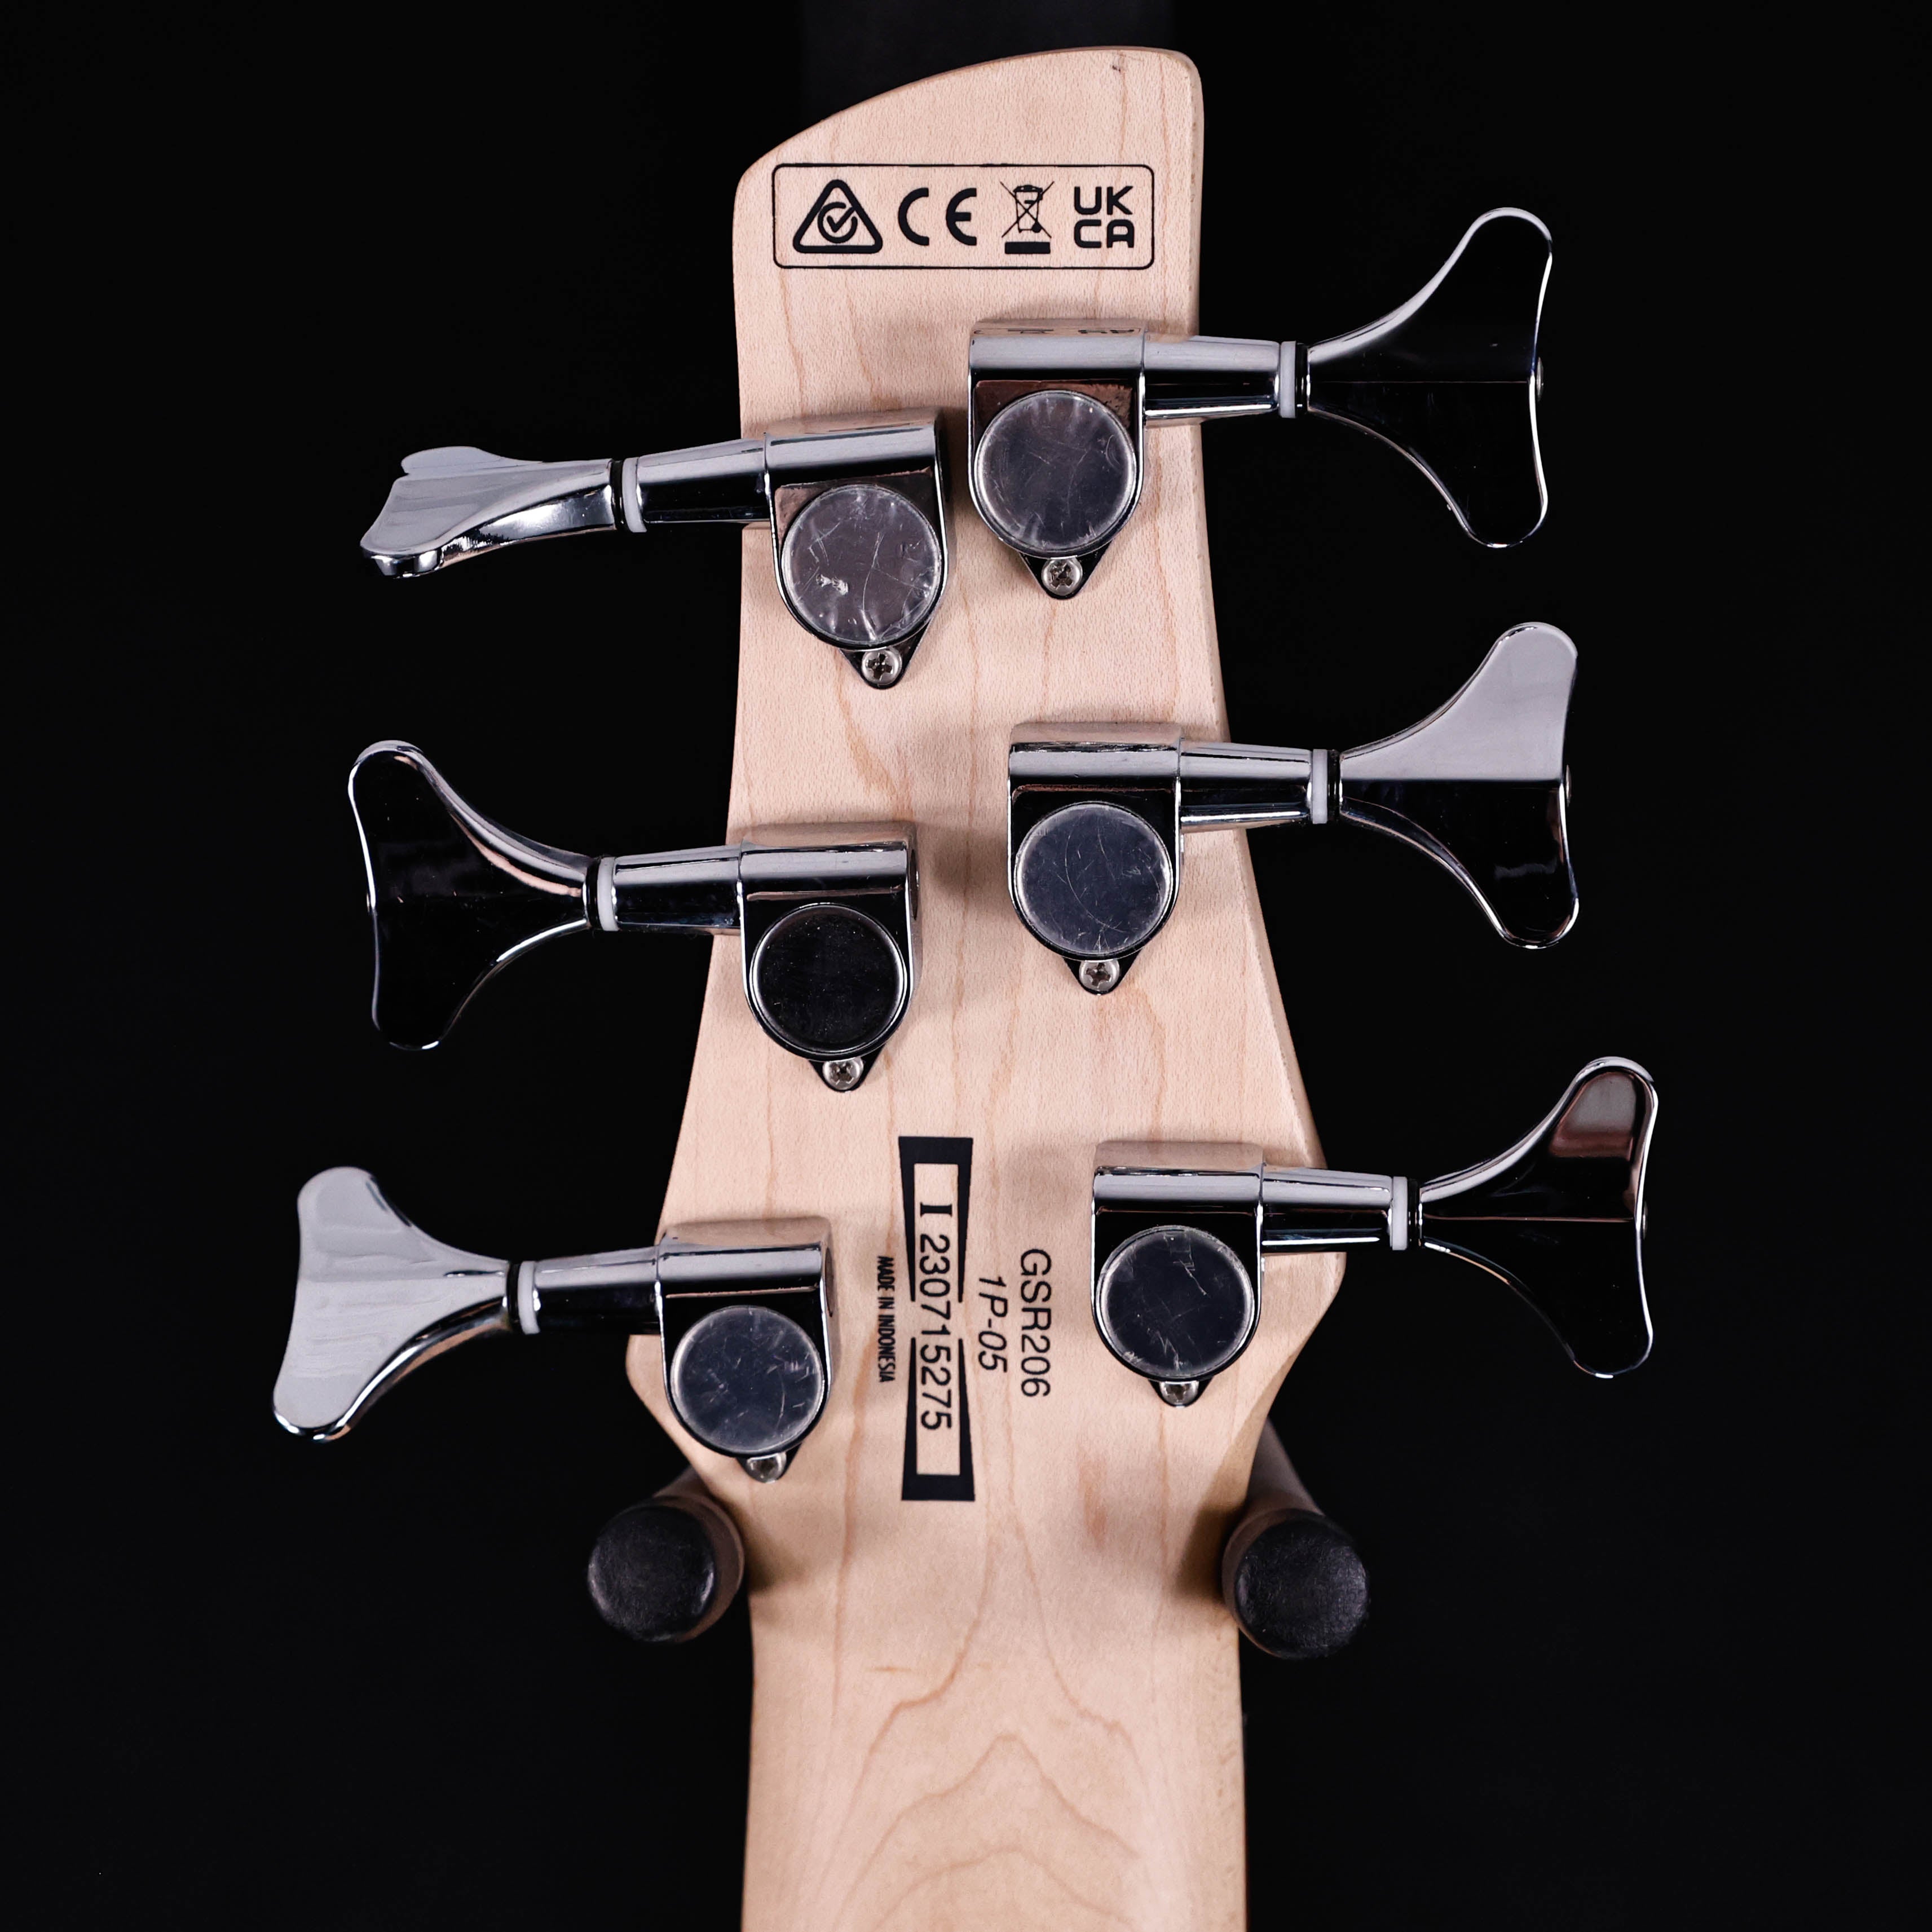 Ibanez GSR206BK Gio Soundgear 6-String Electric Bass Guitar, Black 8lbs 14.7oz